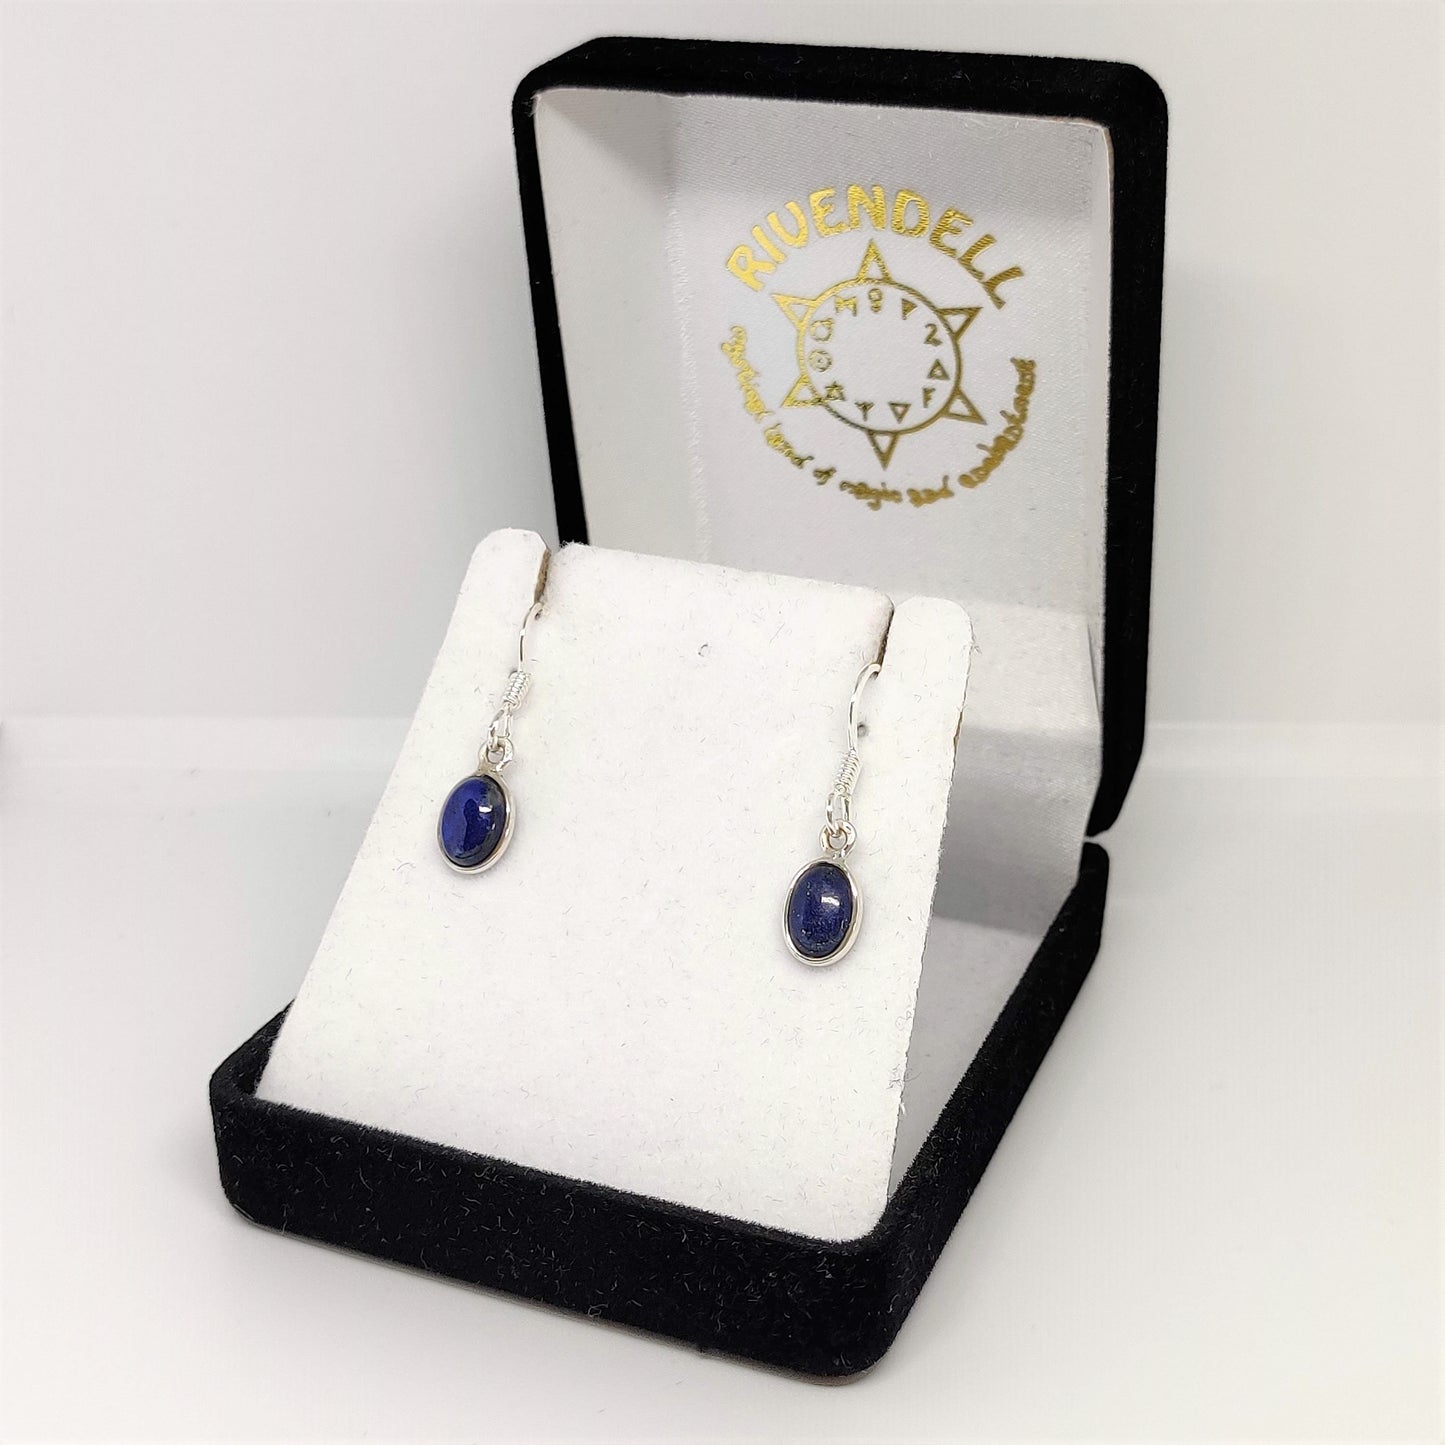 Oval Lapis Lazuli 925 Sterling Silver Dangle Earrings - Rivendell Shop